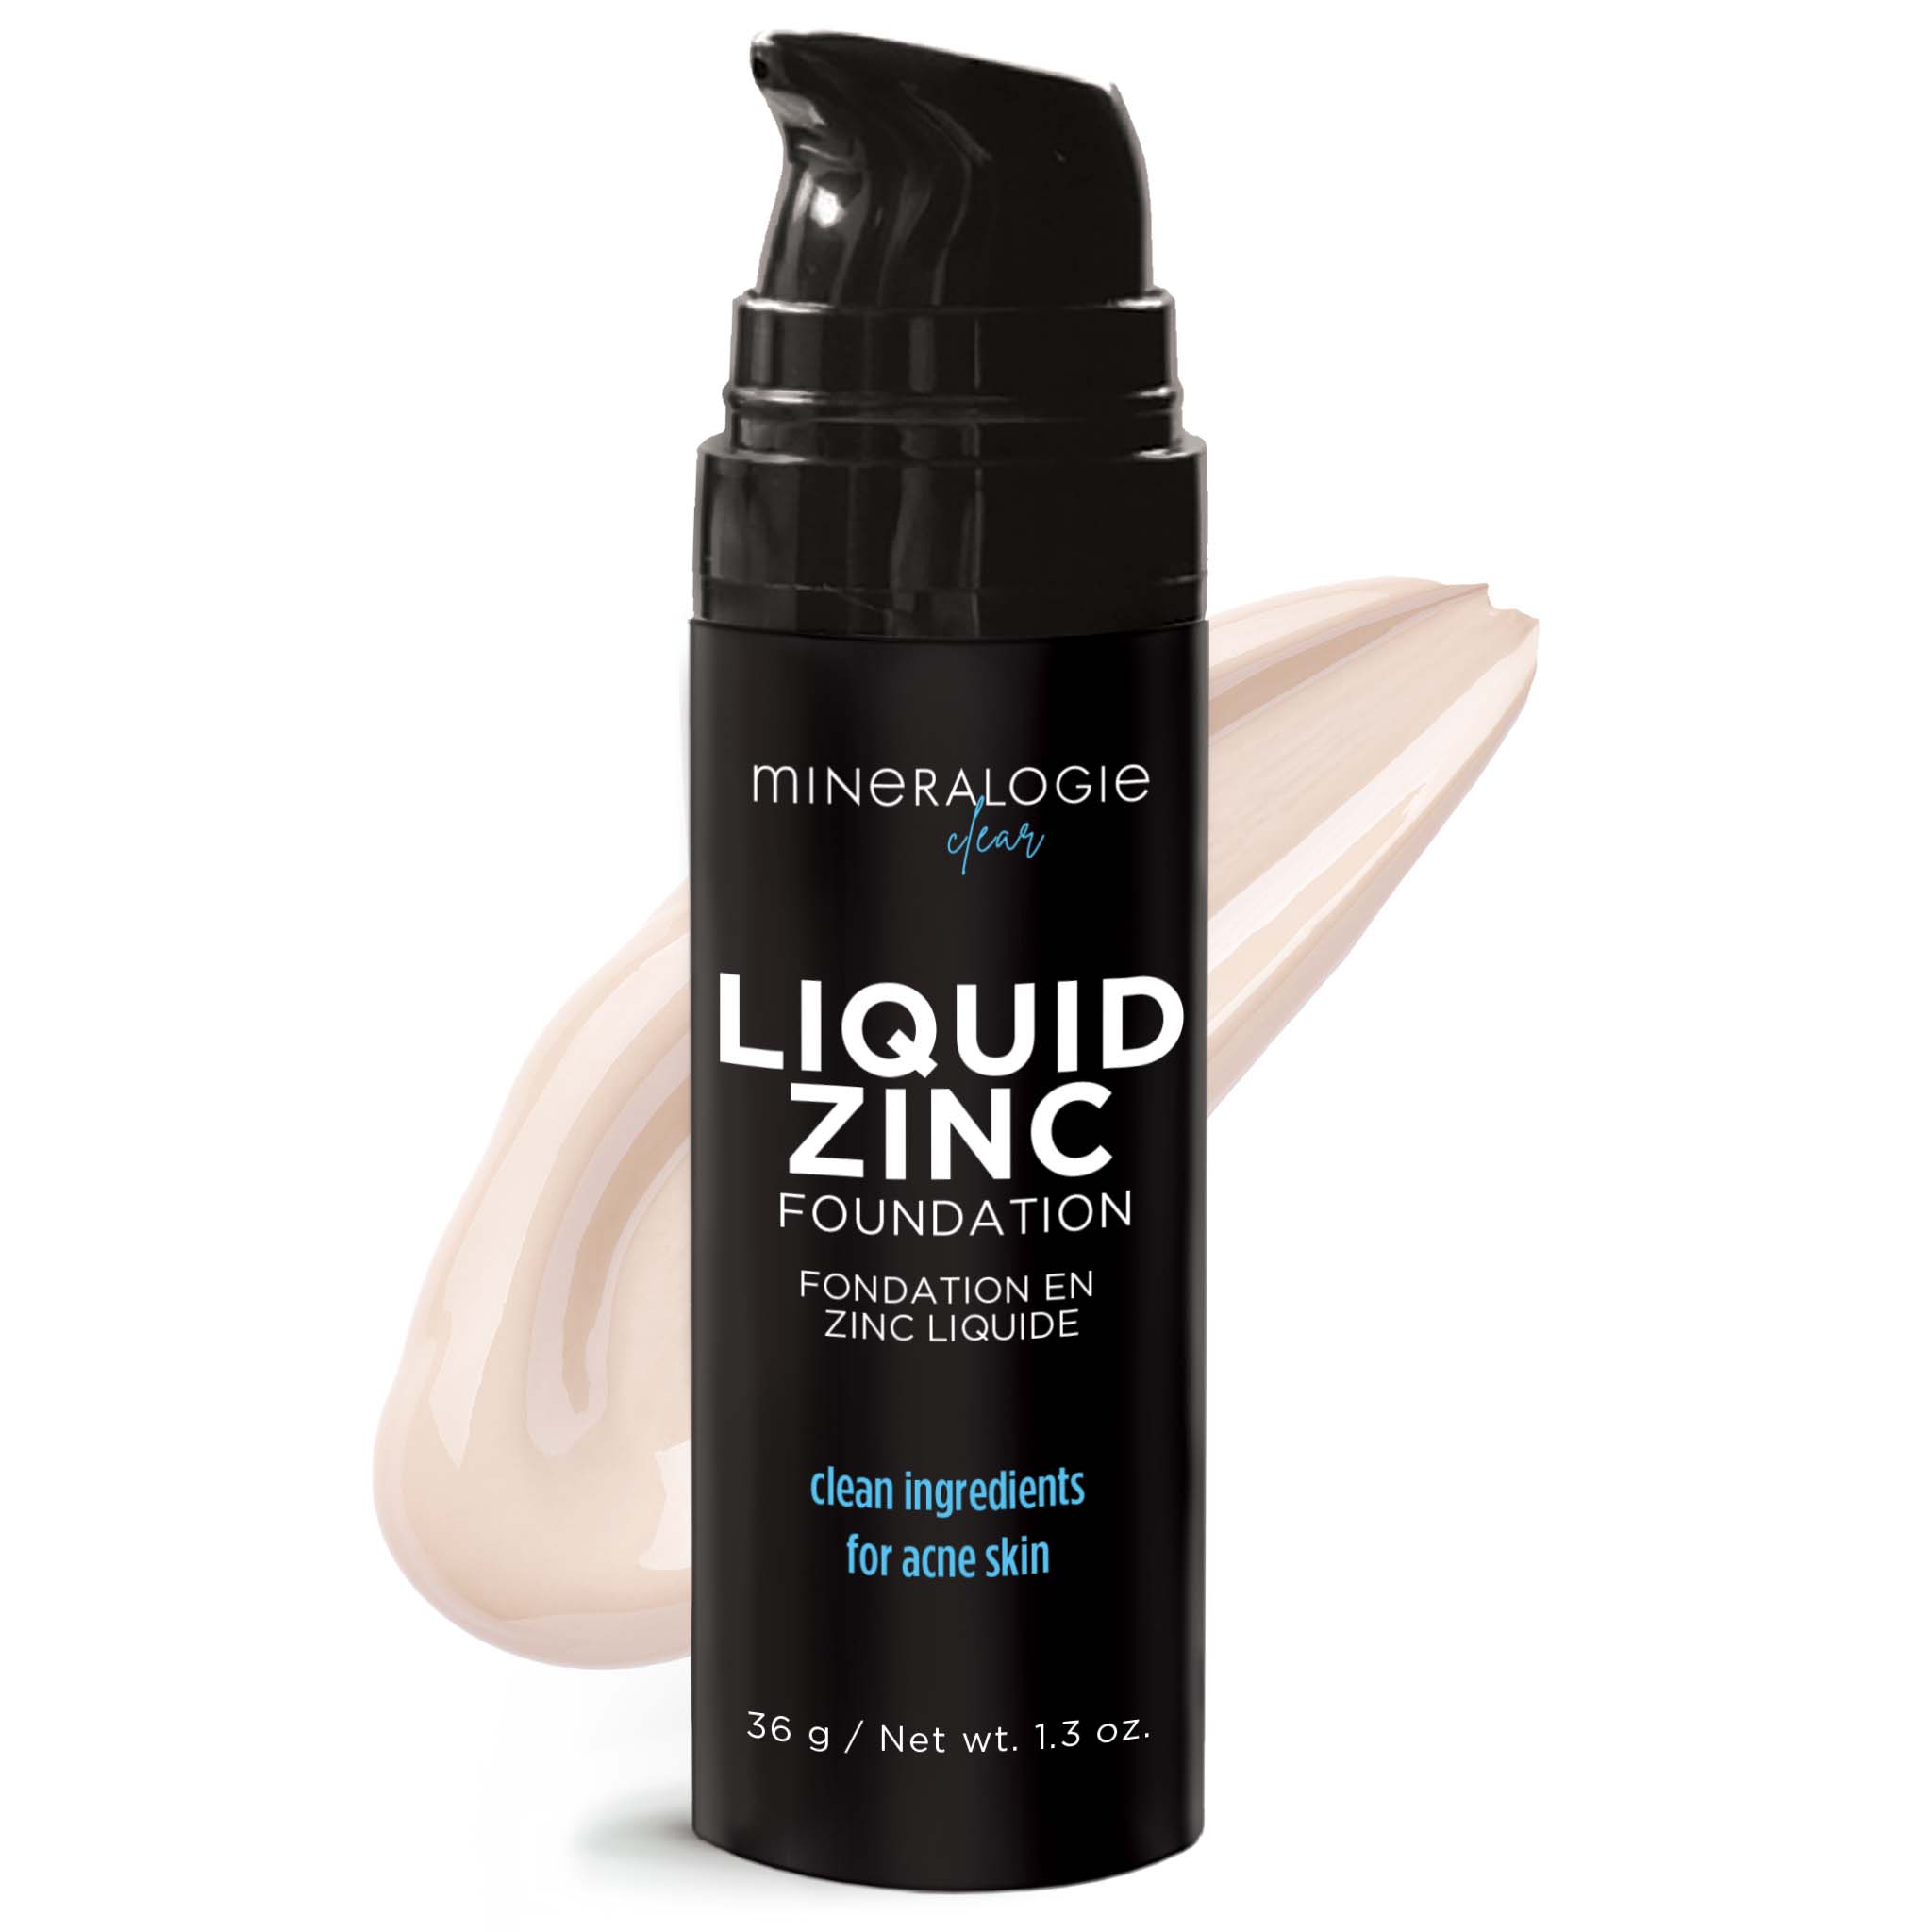 CLEAR Liquid Zinc Foundation by Minerologie